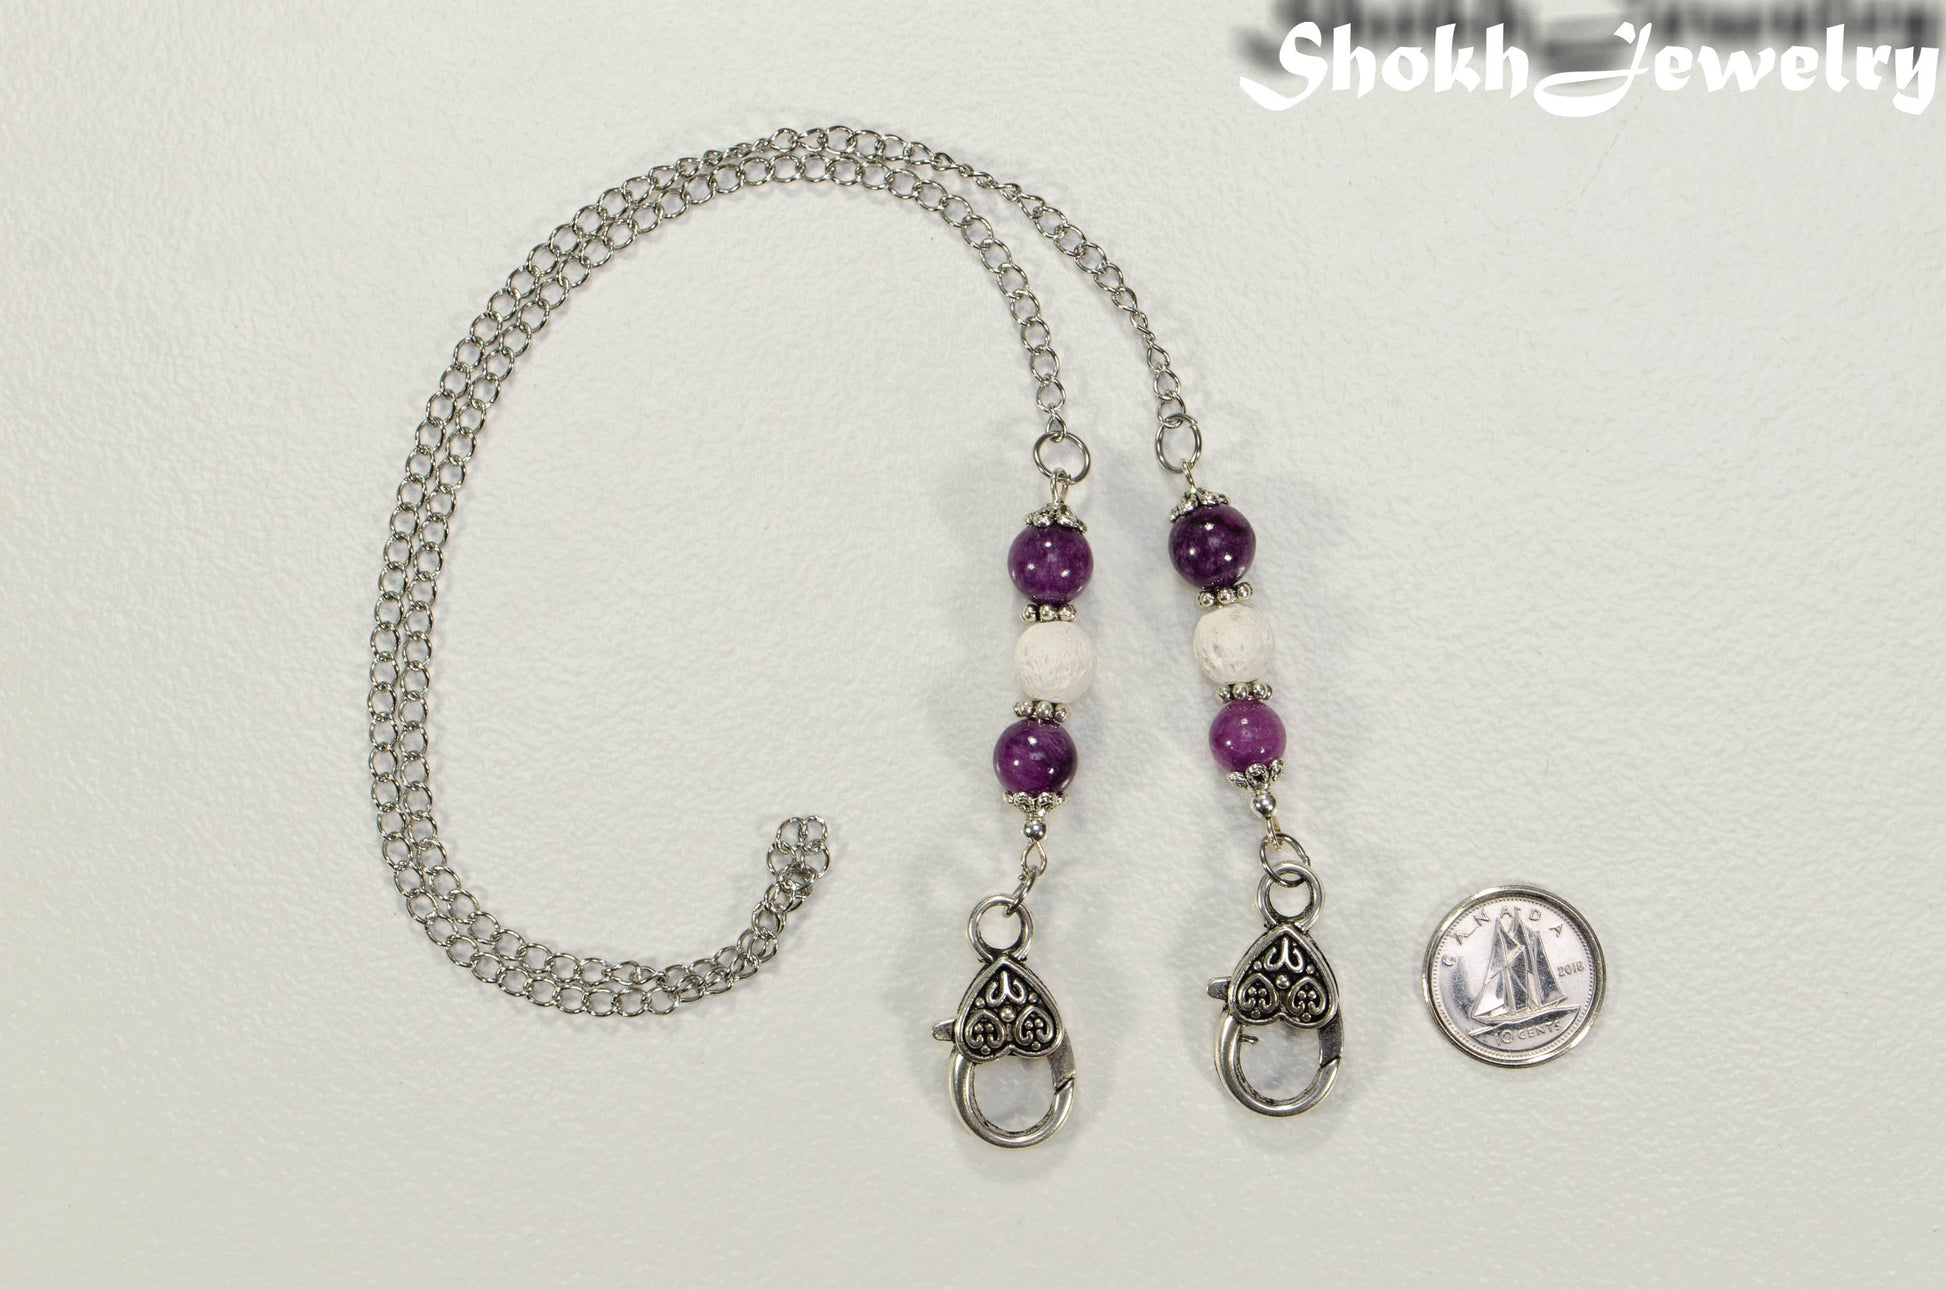 8mm Purple Quartzite and White Lava Stone Eyeglass Chain beside a dime.